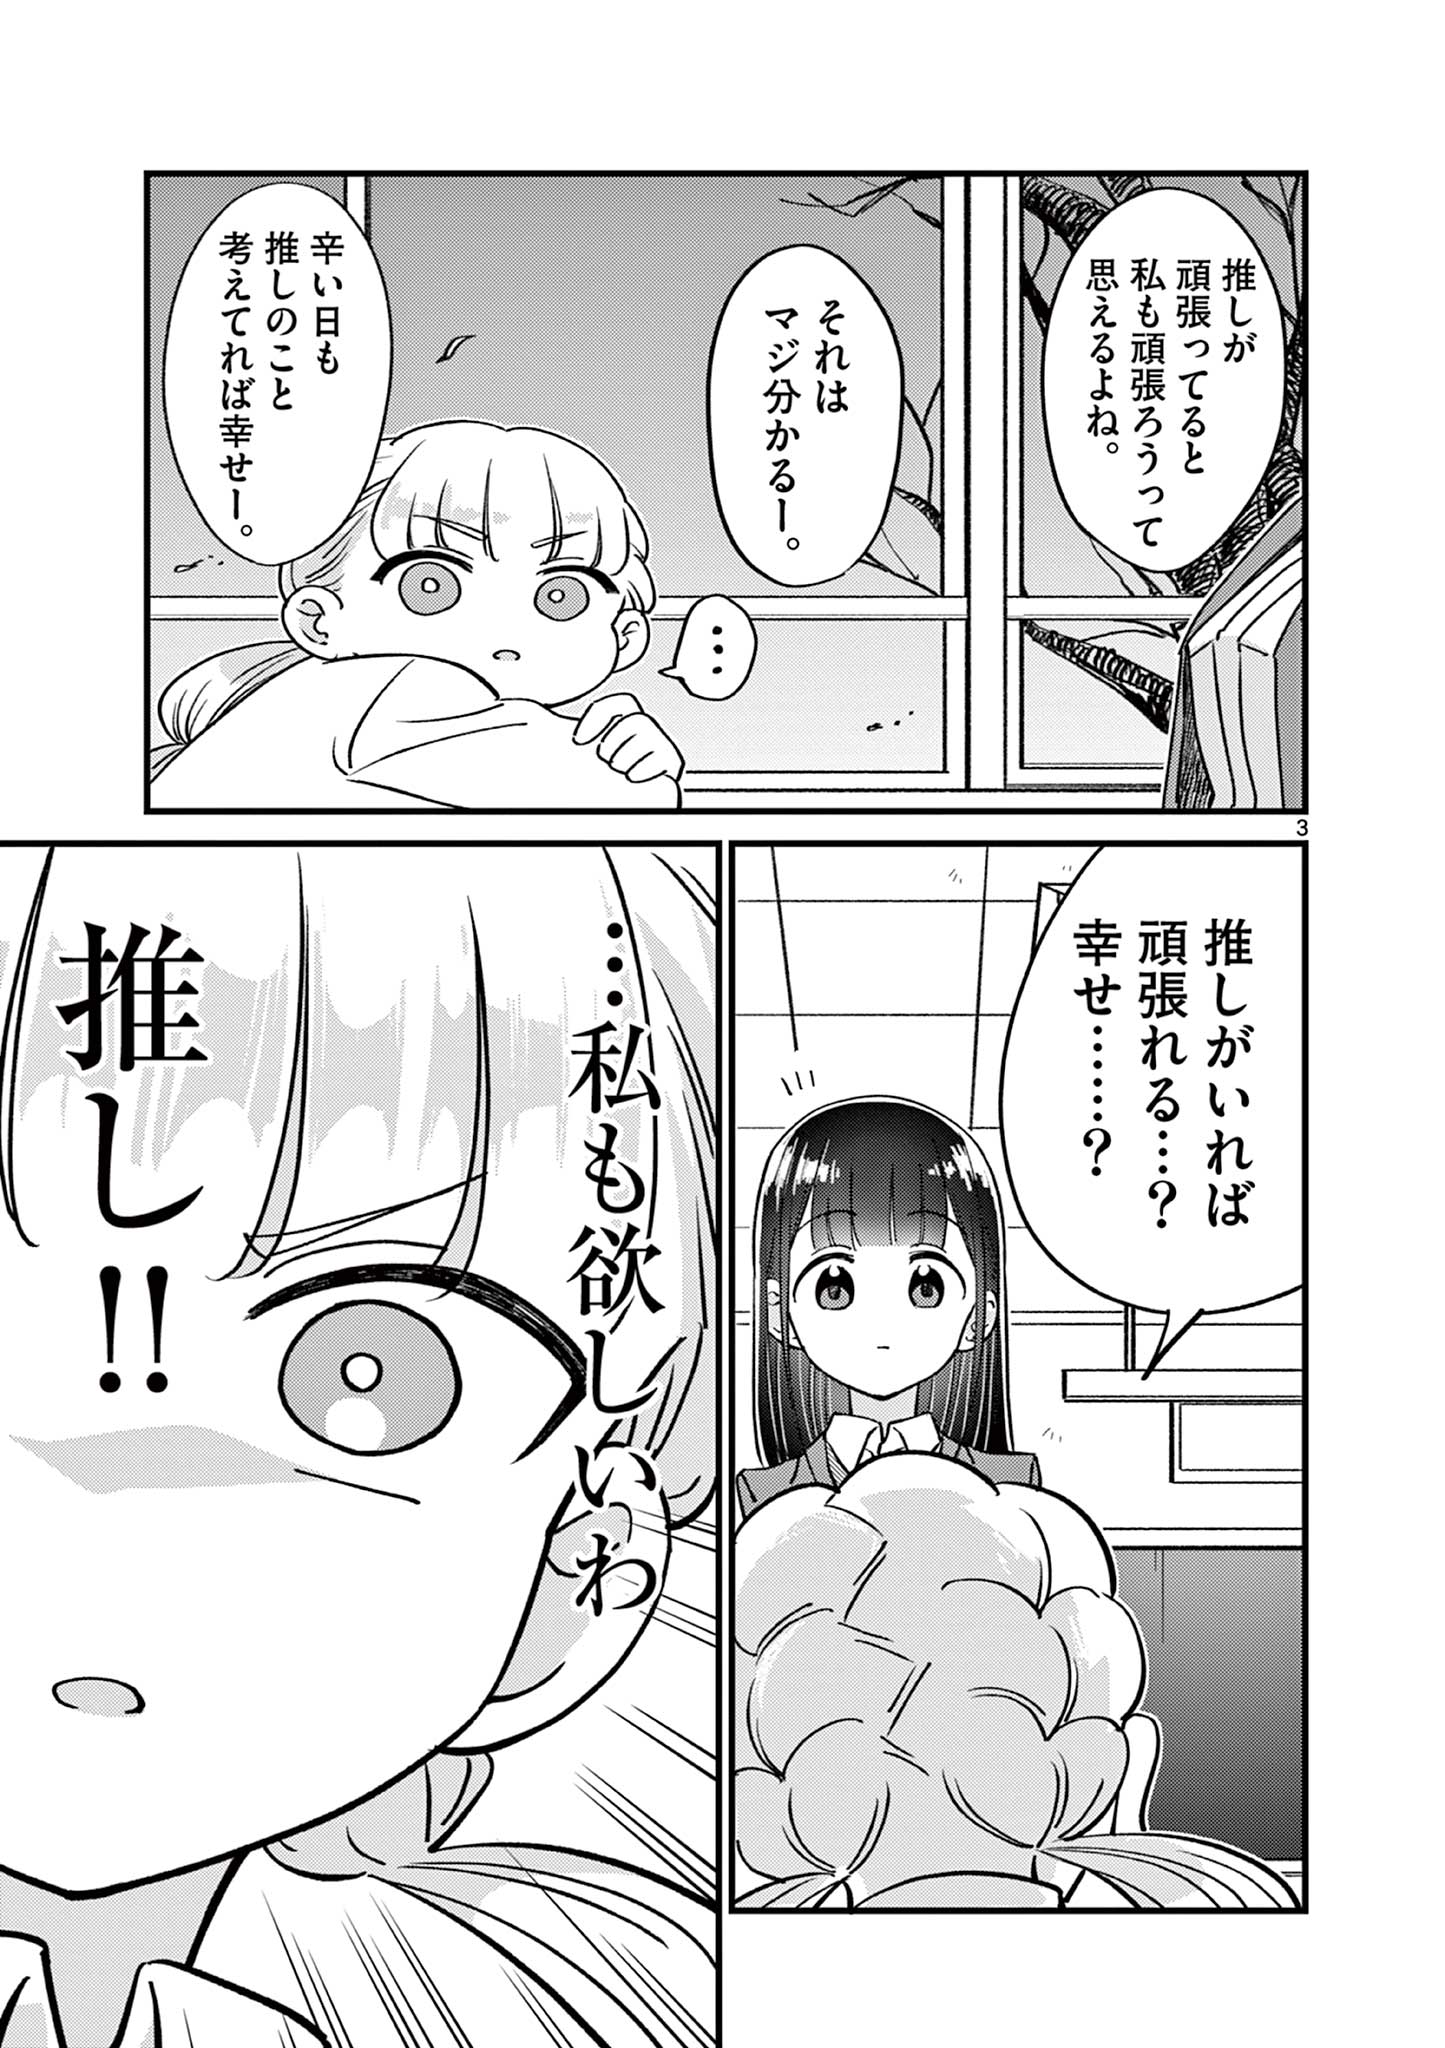 Ranka-chan wa Bitch ni Naritai - Chapter 15 - Page 3